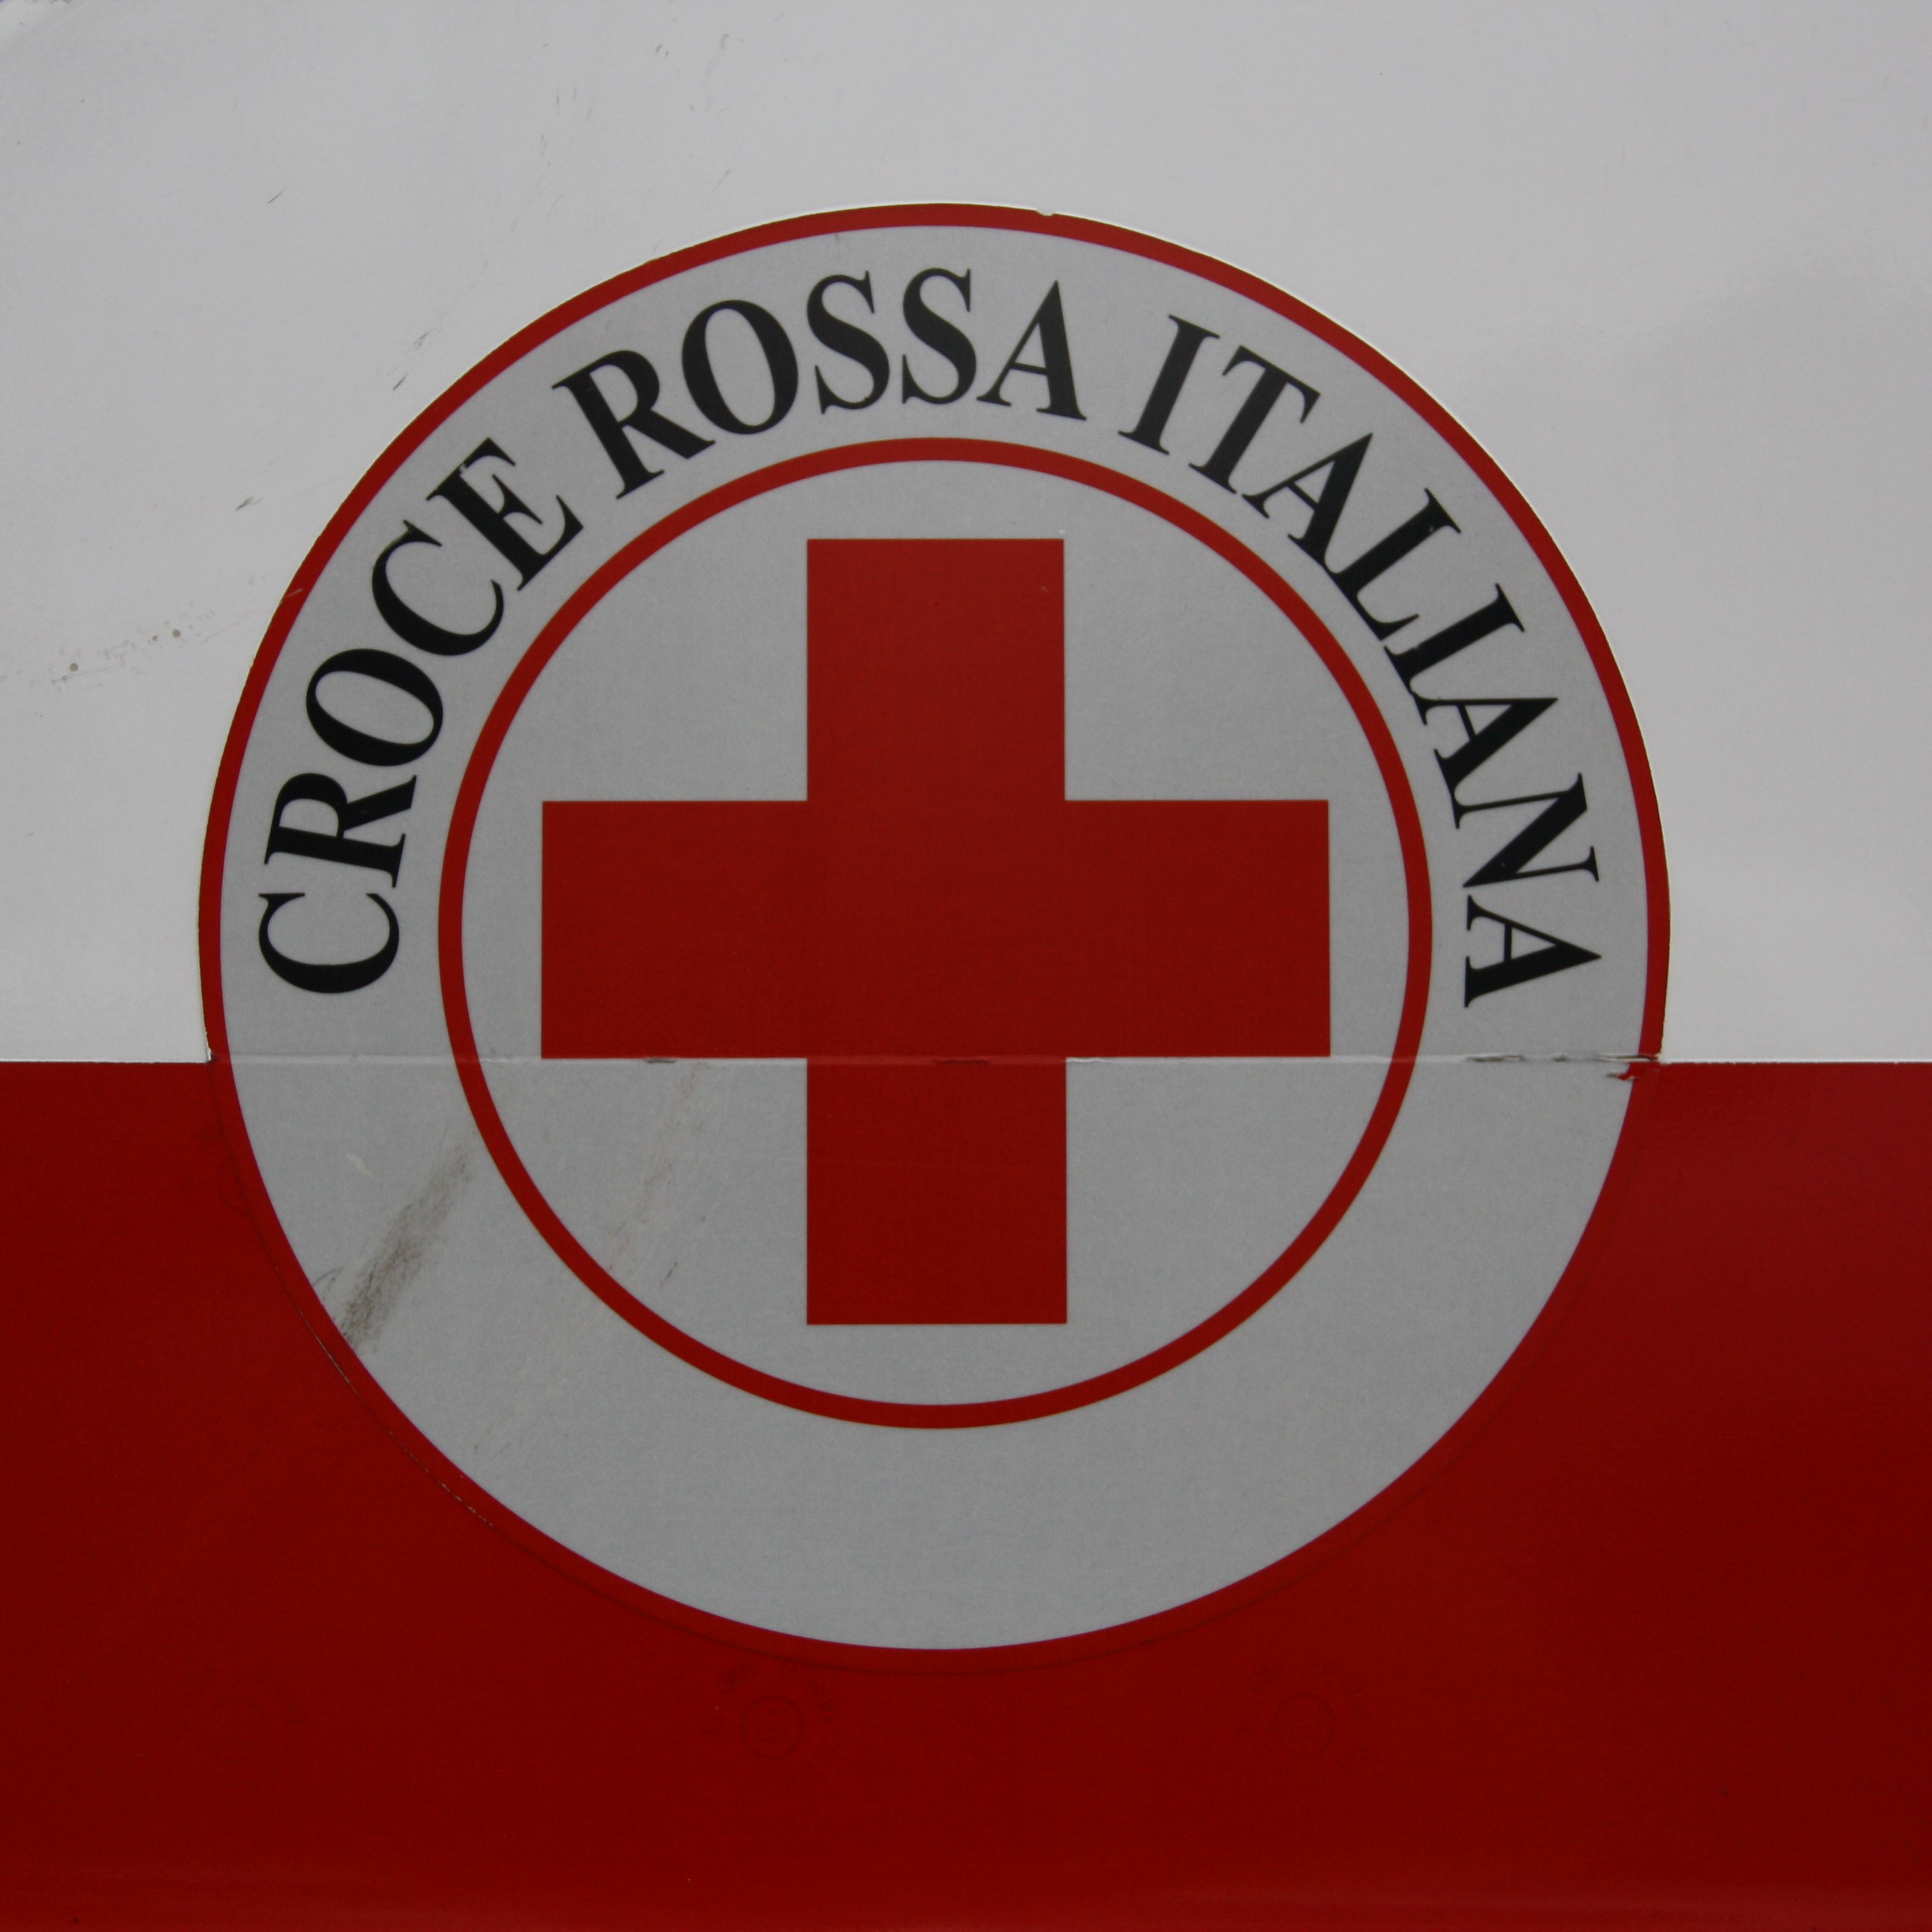 File:Croce Rossa Italiana emblem 01.JPG - Wikipedia